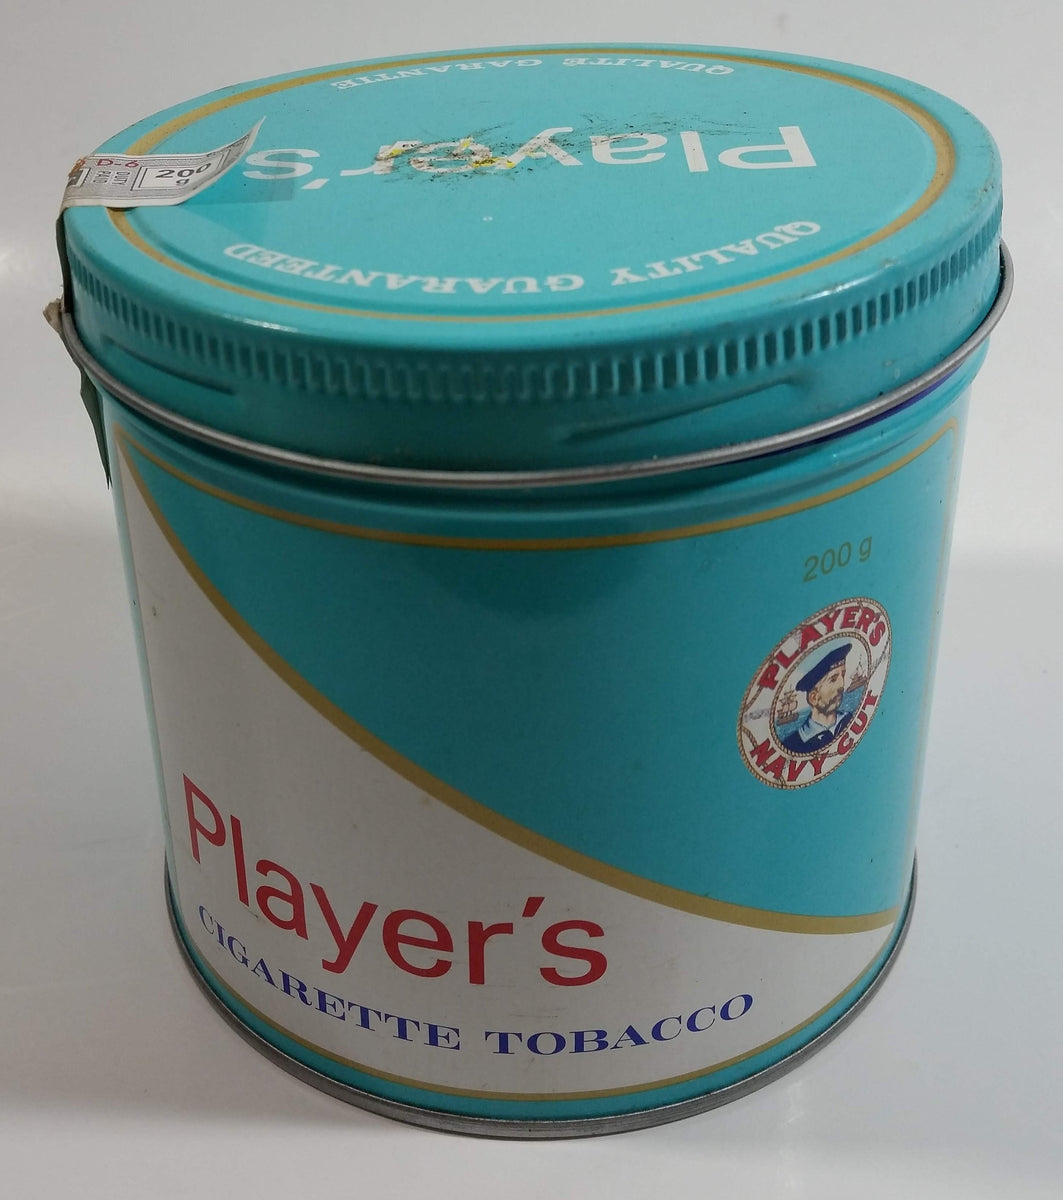 Canadian Player's Navy Cut Medium Blue Cigarettes Tin -  Canada